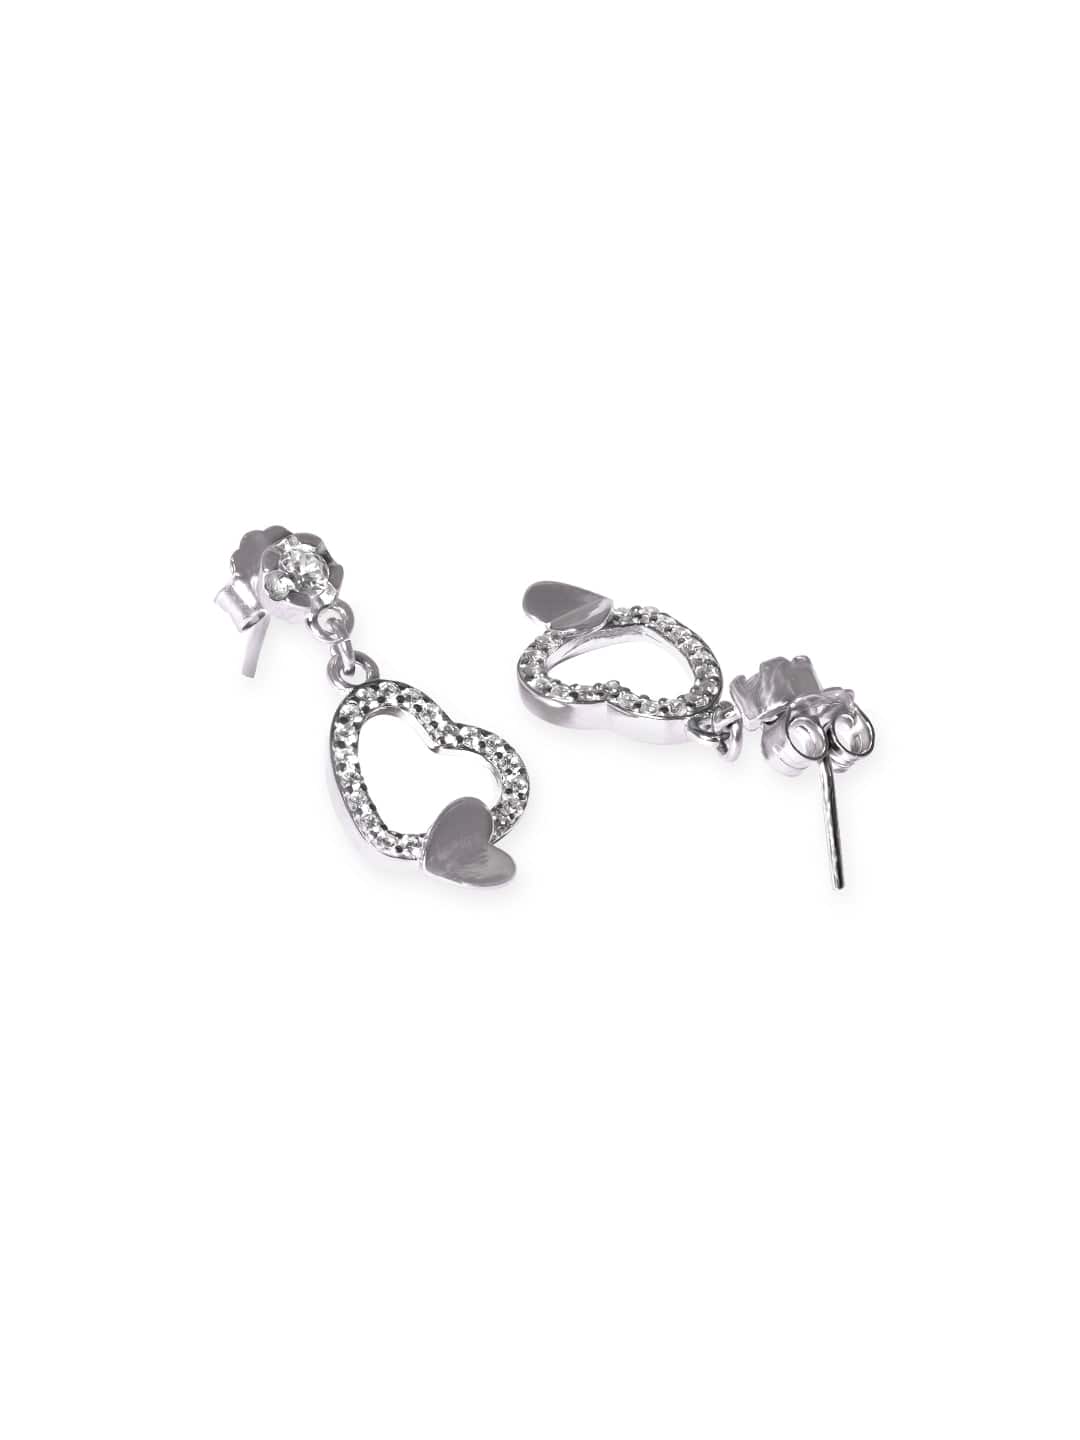 Buy 925 Sterling Silver American Diamond Heart Solitaire Stud Earrings for  Women Girls Adjustable online